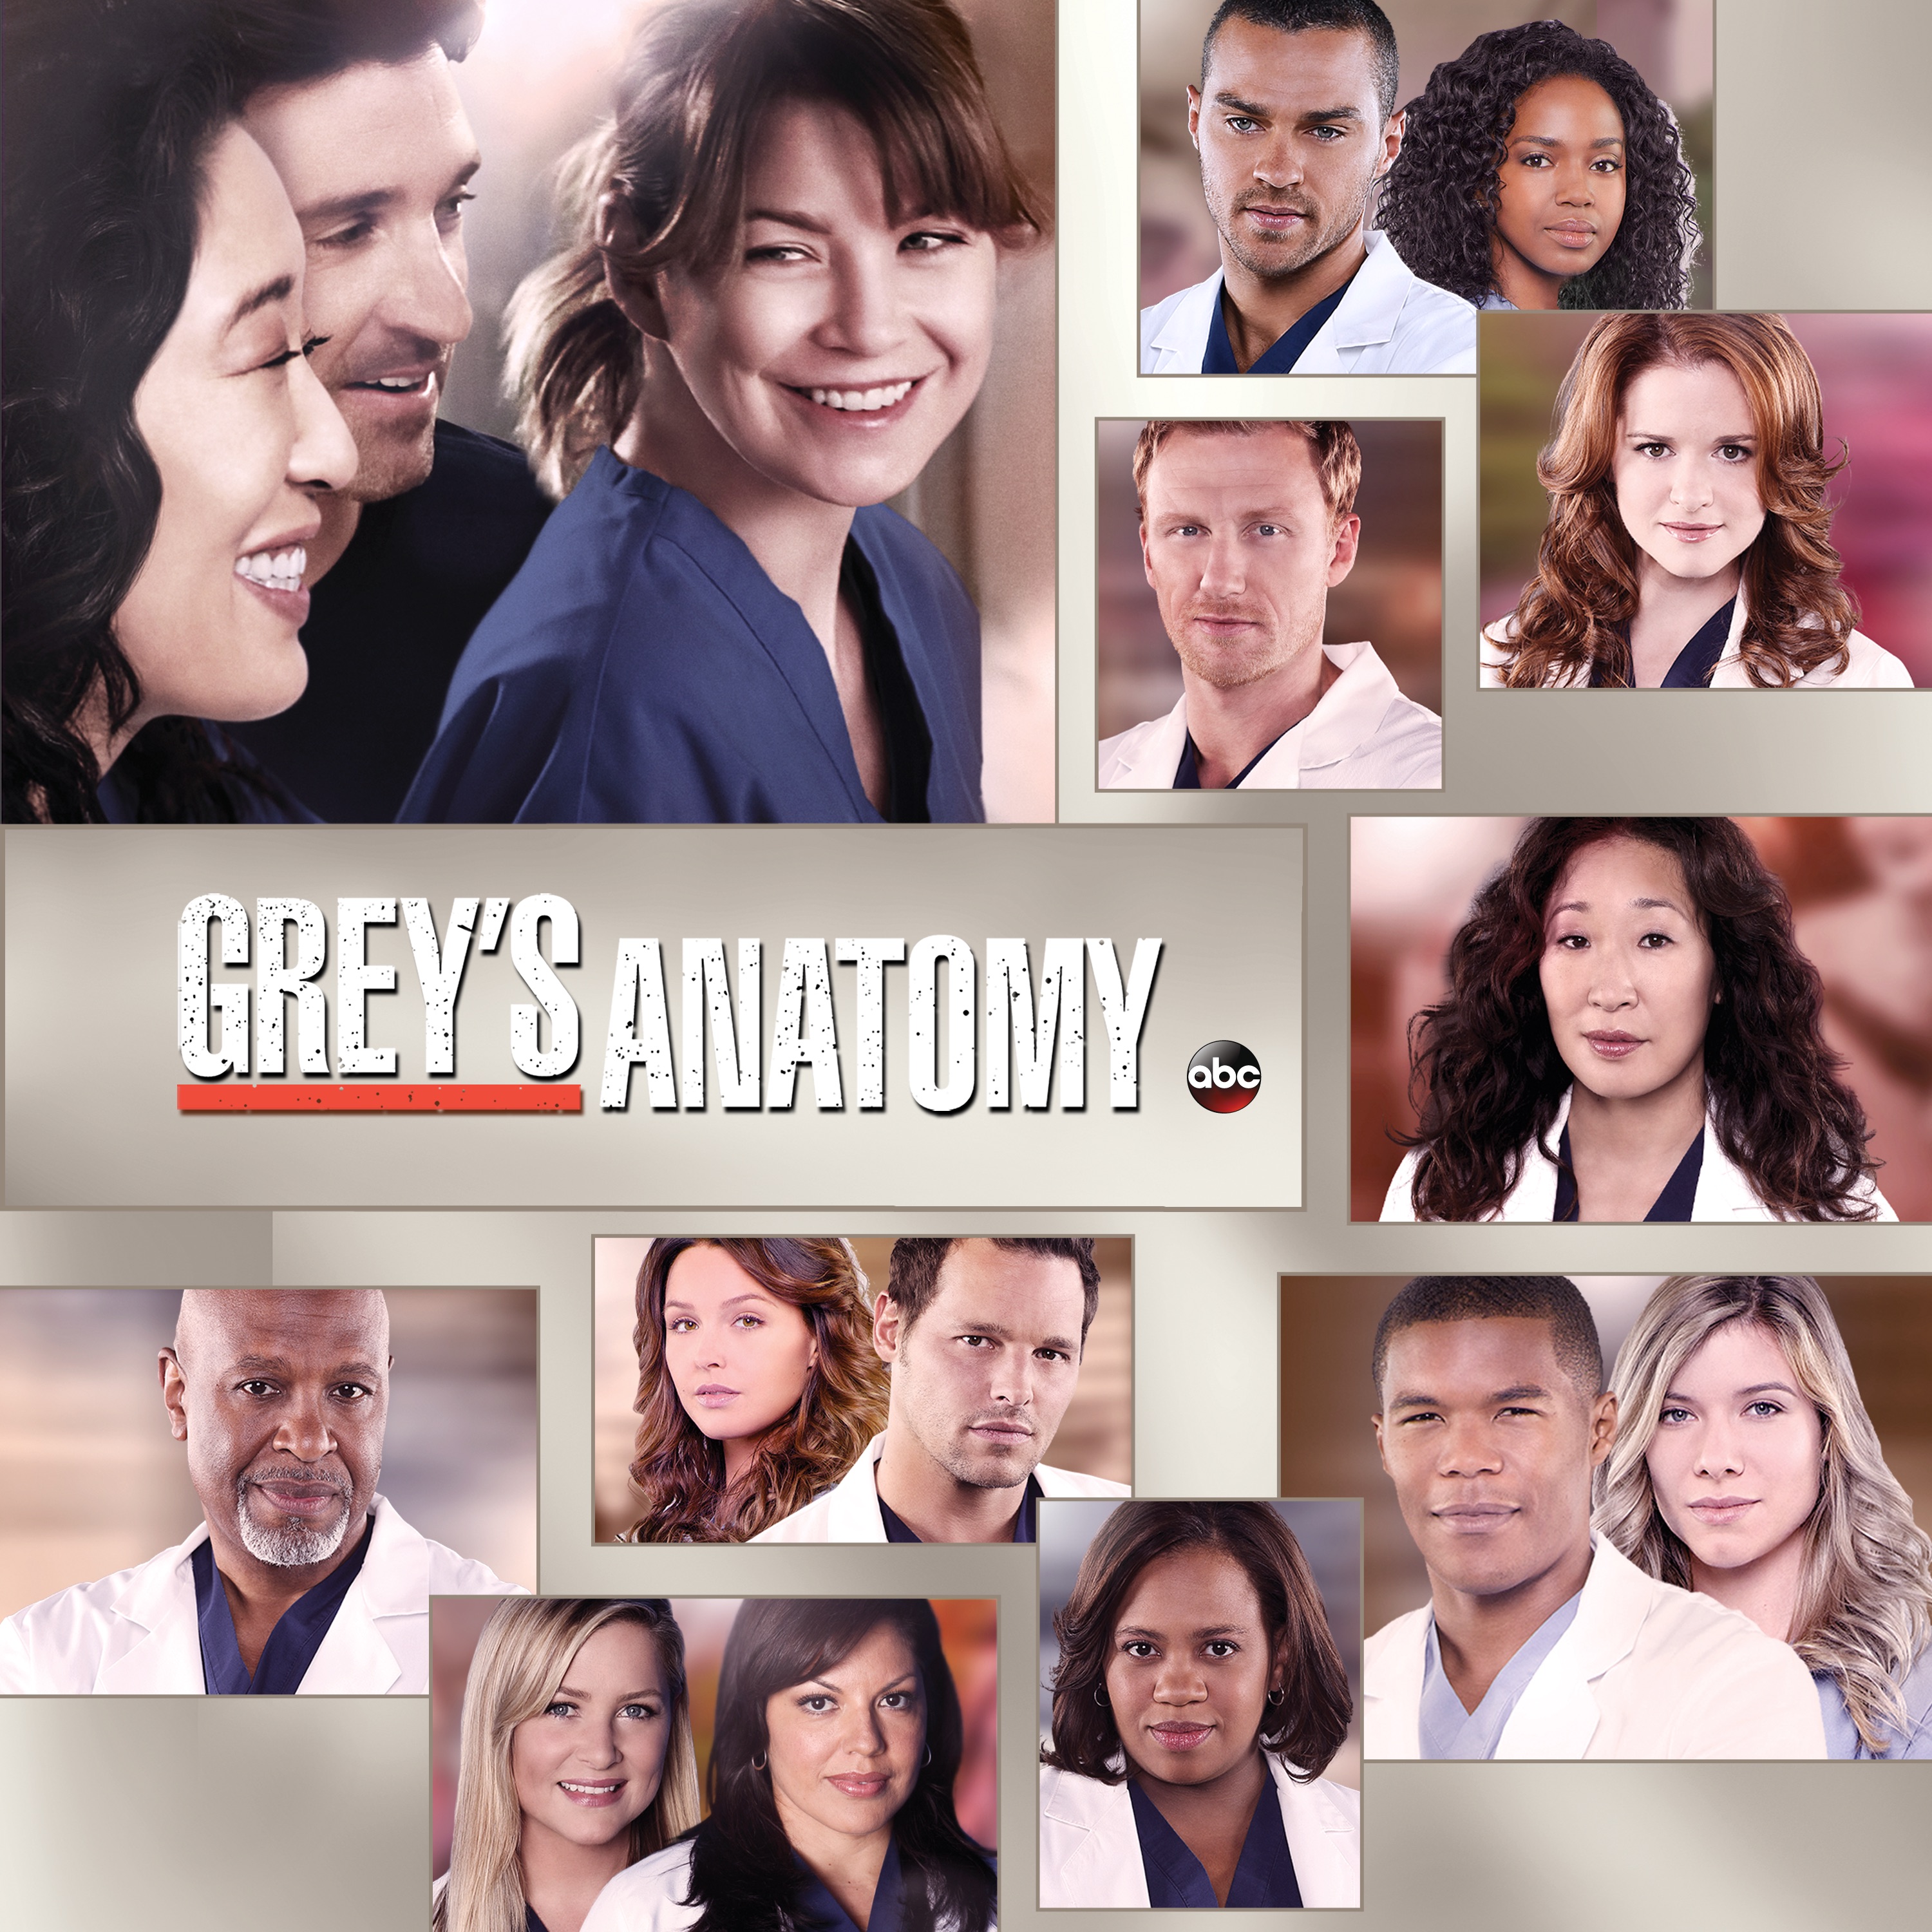 Greys Anatomy season 10 - Wikipedia